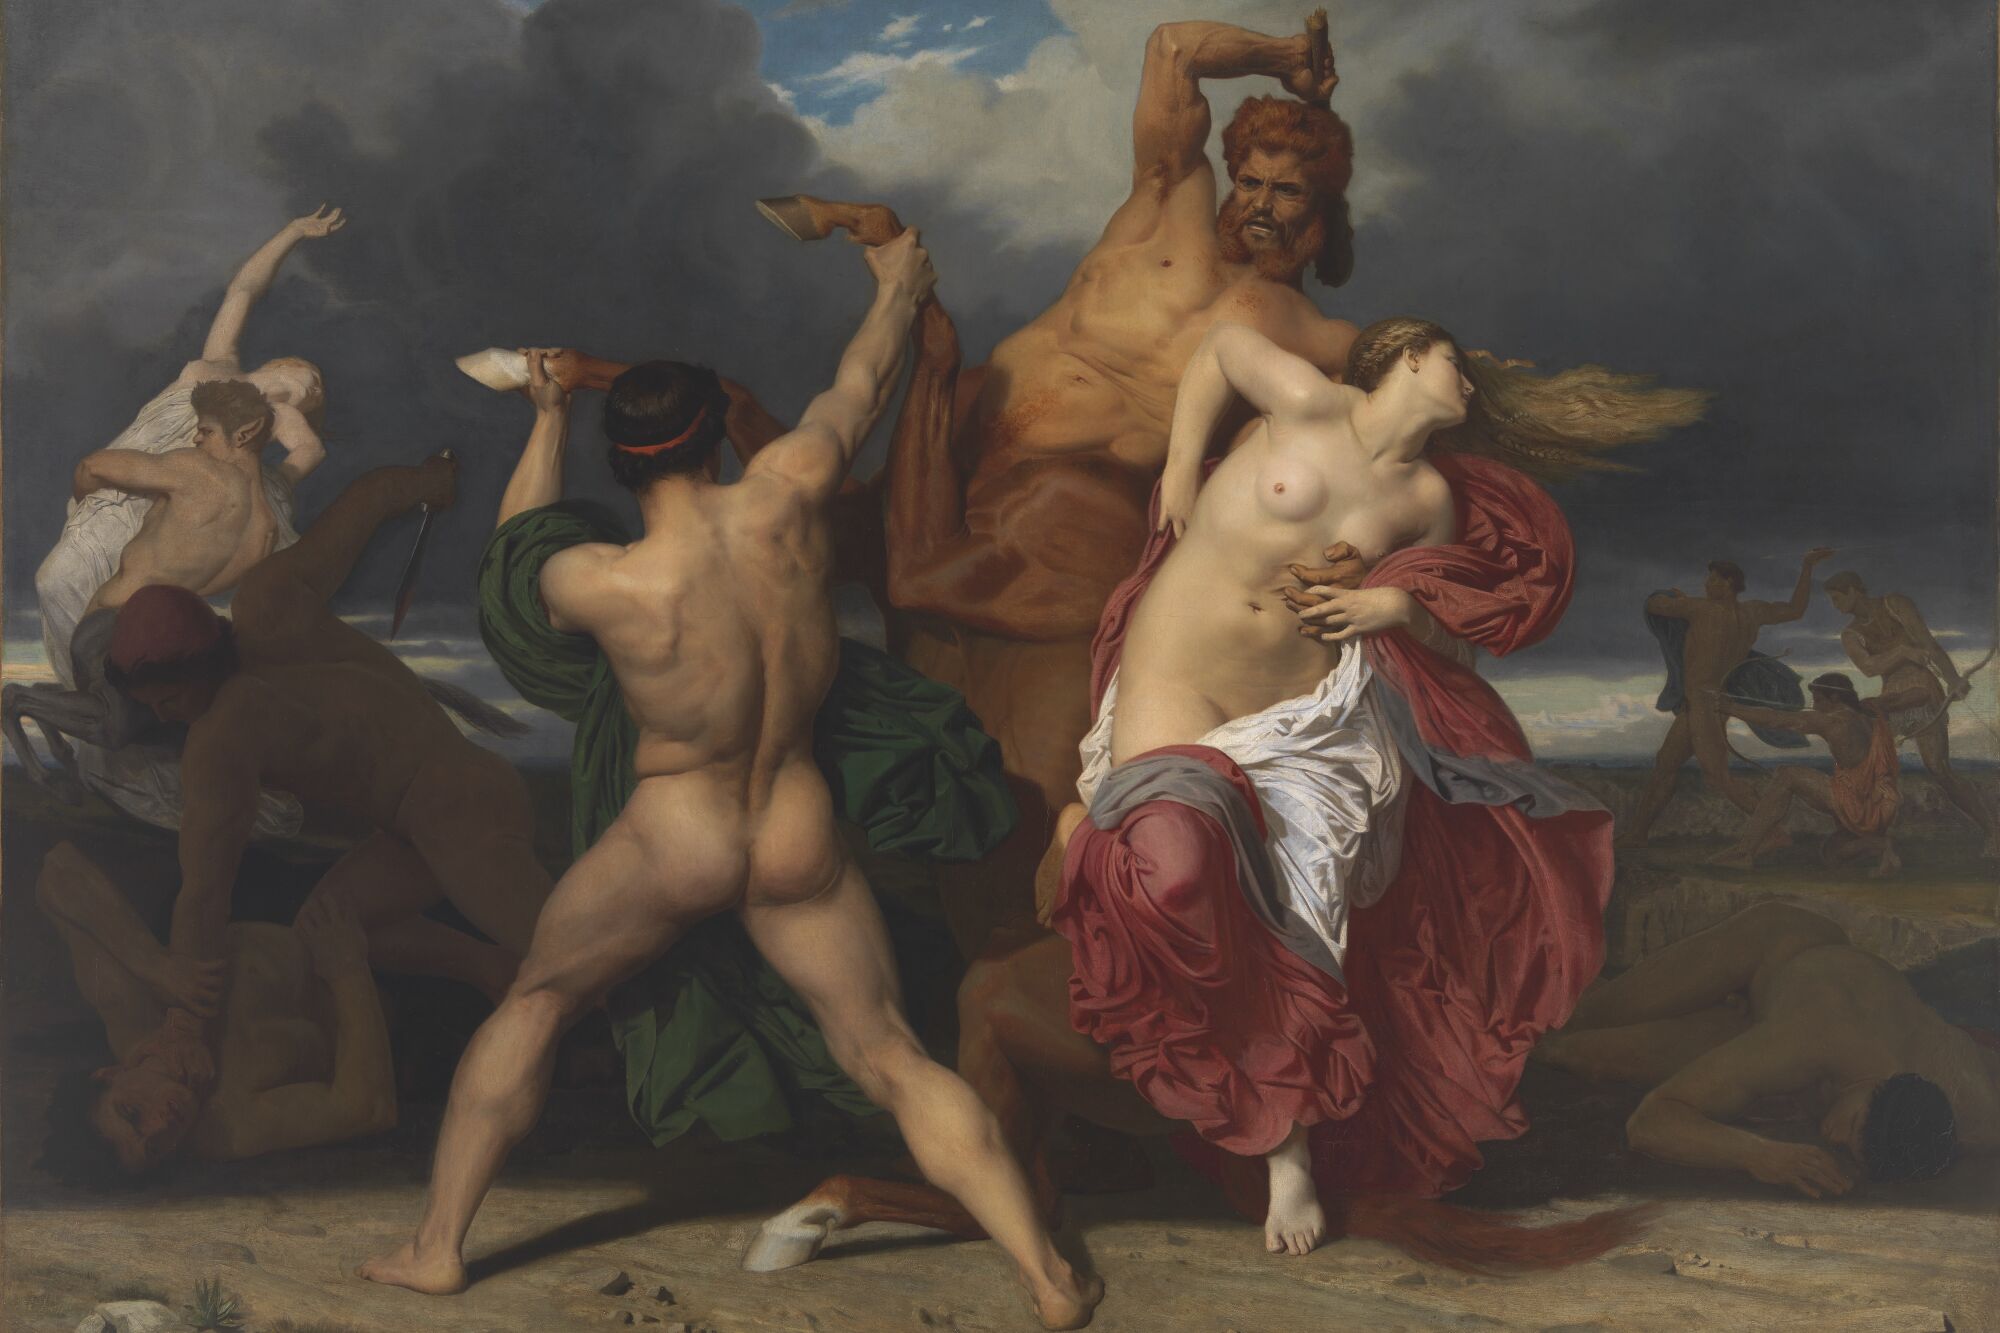 William-Adolphe Bouguereau: "Battle of the Centaurs and the Lapithae" (Bataille des Centaures contre les Lapithes), 1852